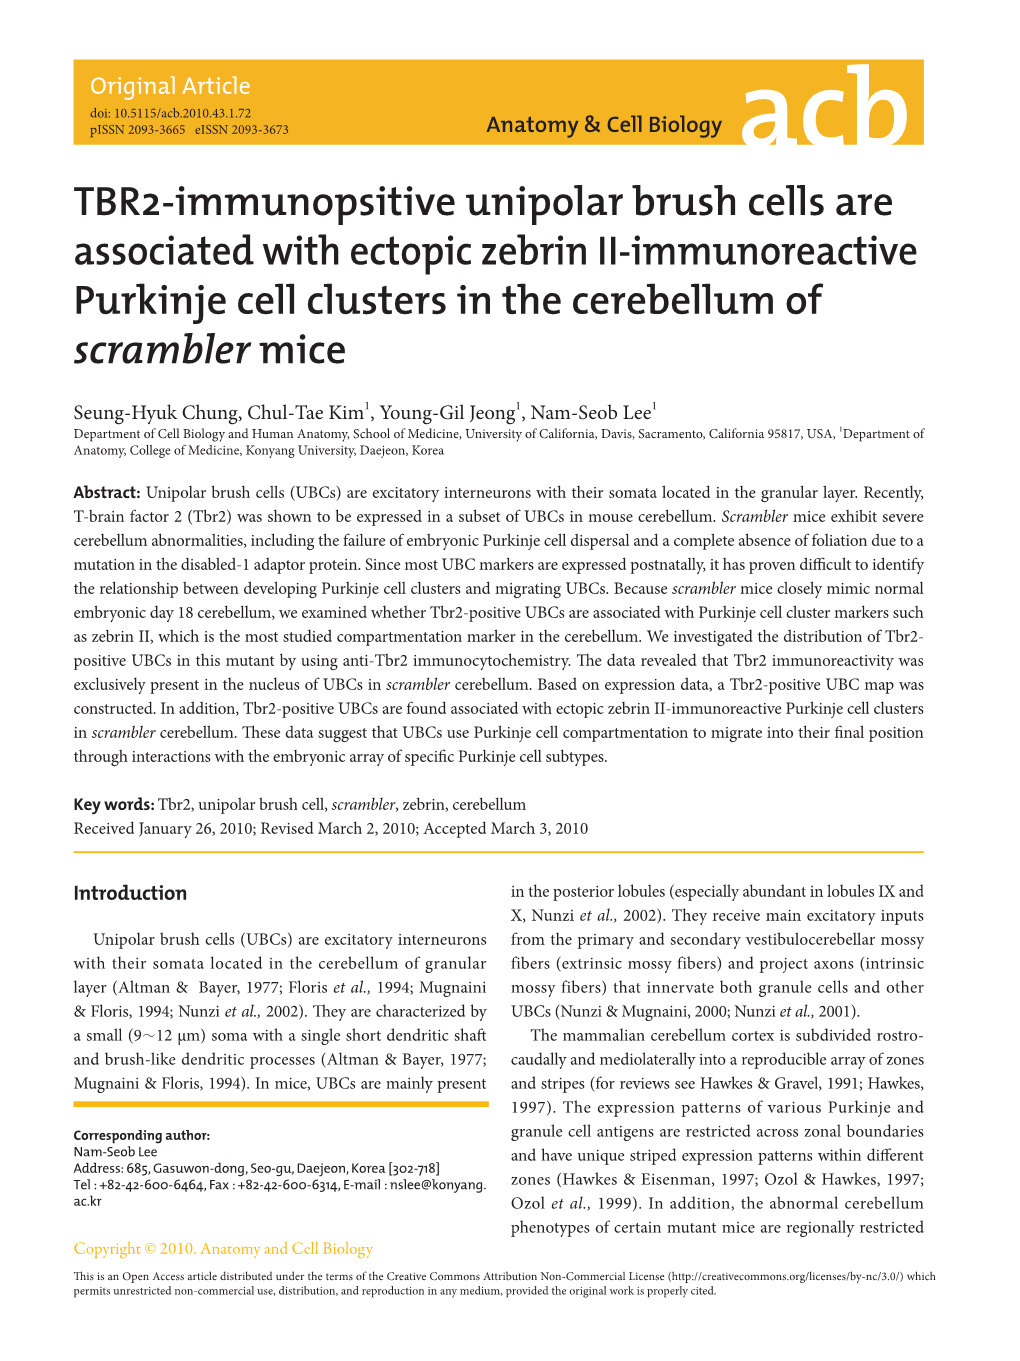 TBR2-Immunopsitive Unipolar Brush Cells Are Associated with Ectopic Zebrin II-Immunoreactive Purkinje Cell Clusters in the Cerebellum of Scrambler Mice